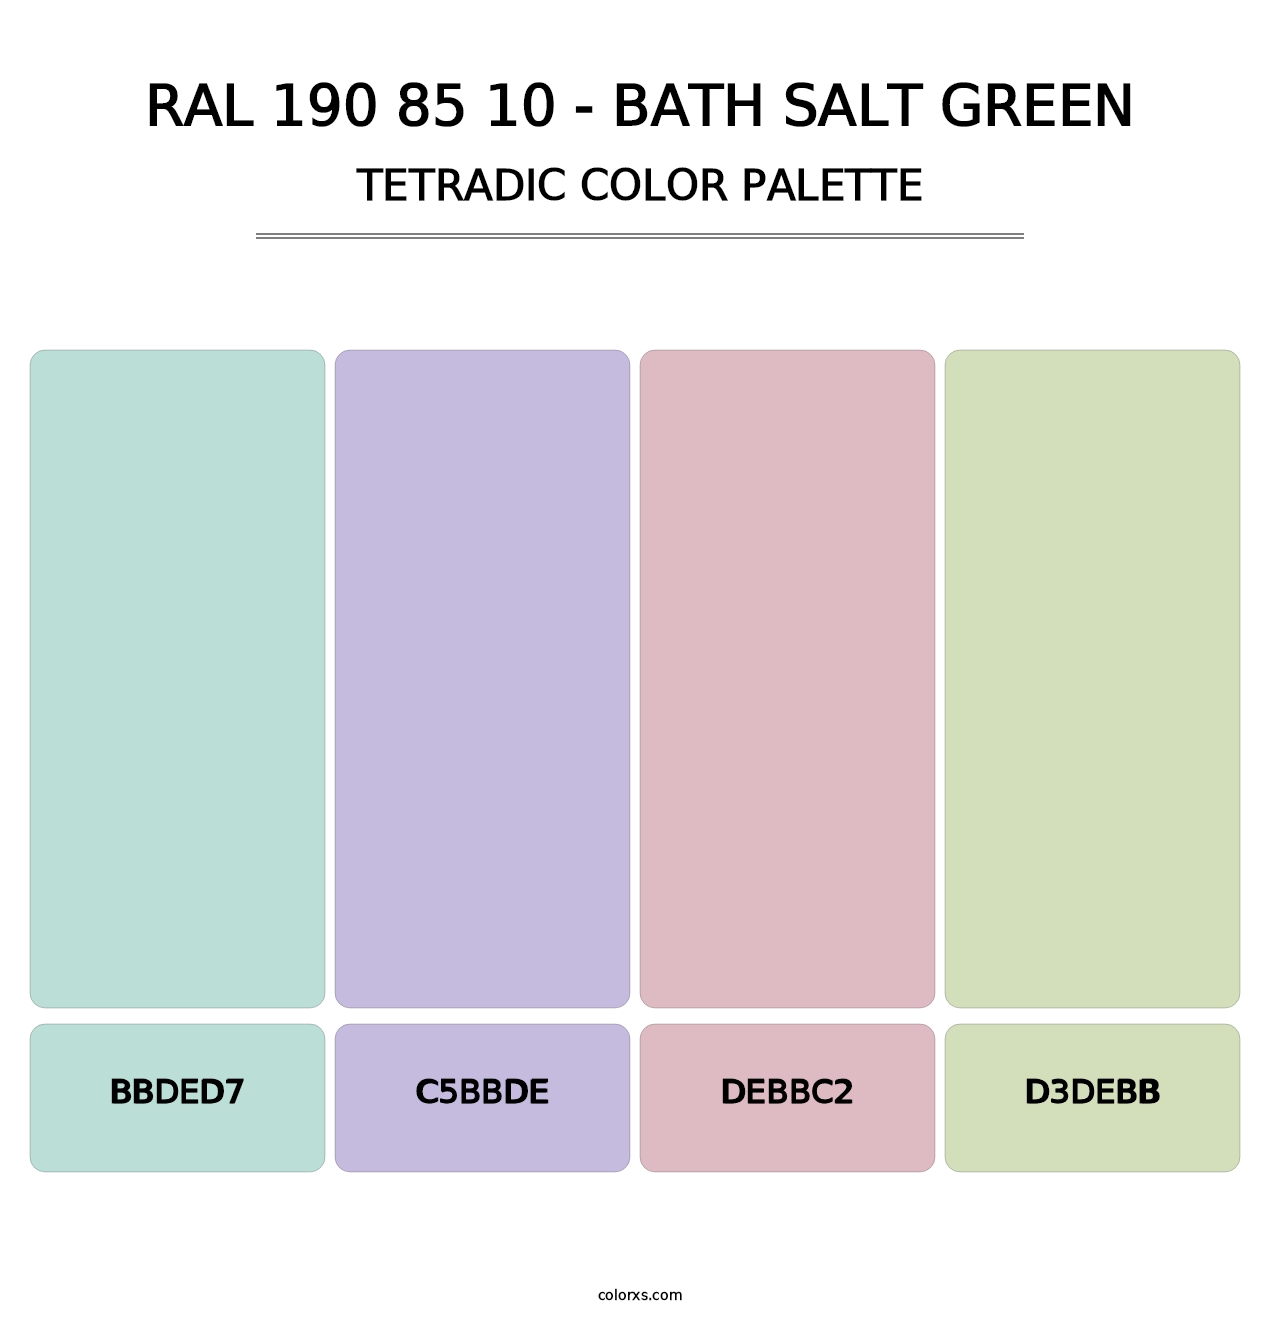 RAL 190 85 10 - Bath Salt Green - Tetradic Color Palette